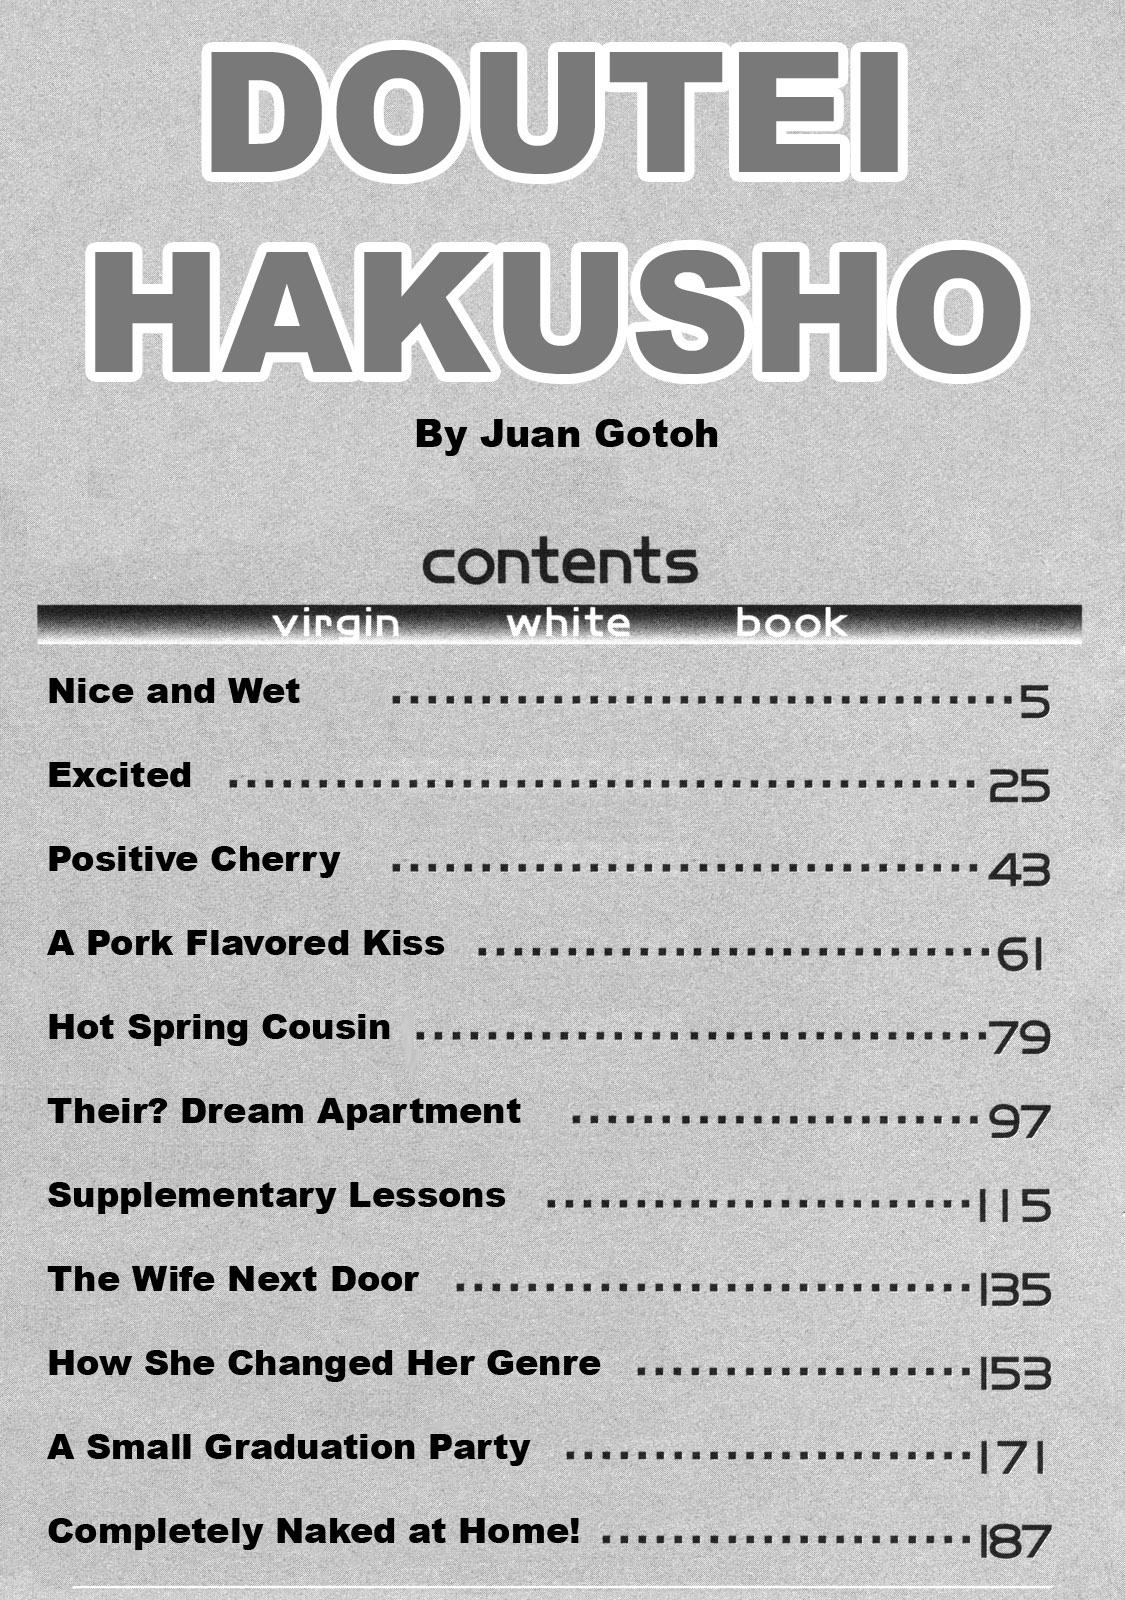 Doutei Hakusho - Virgin White Book 3